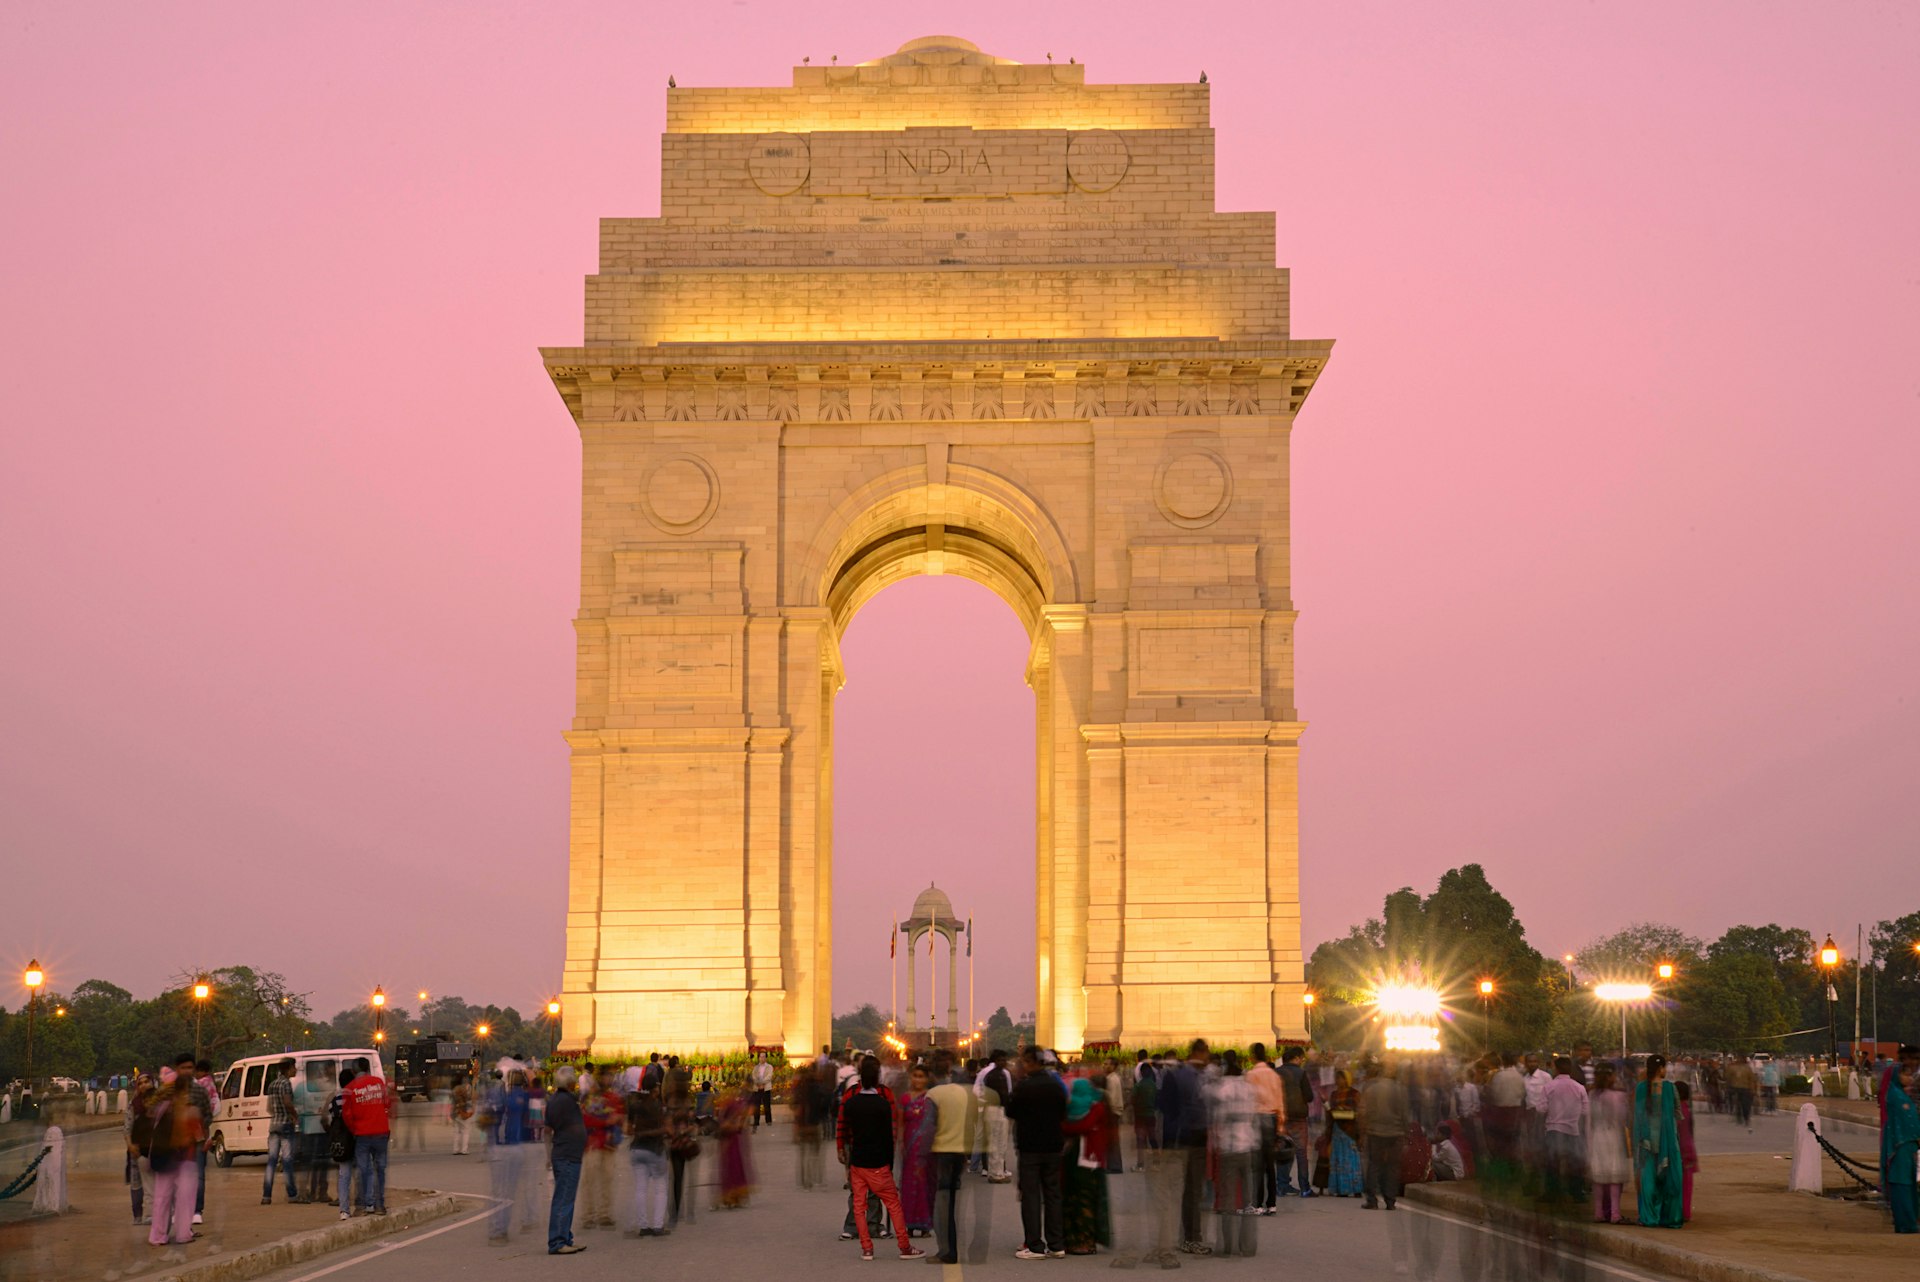 Dusk falls over India Gate in New Delhi